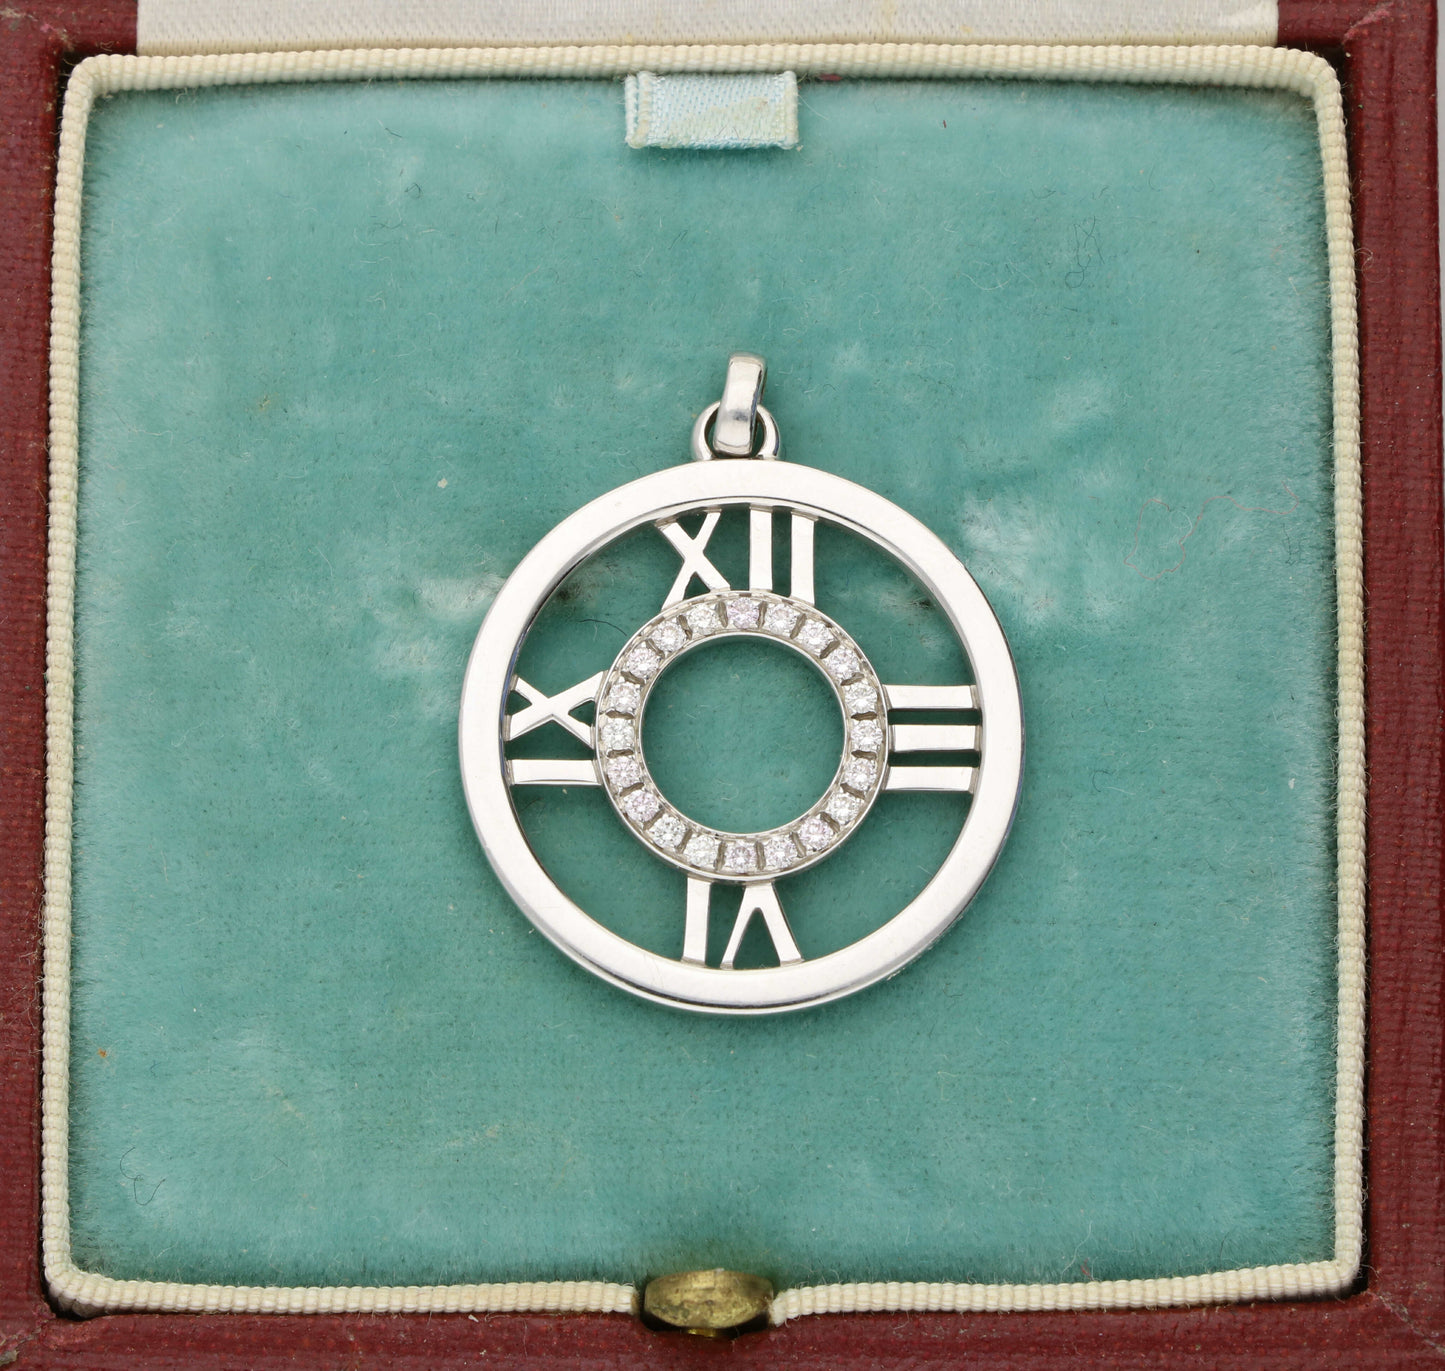 Tiffany & Co Atlas collection pendant